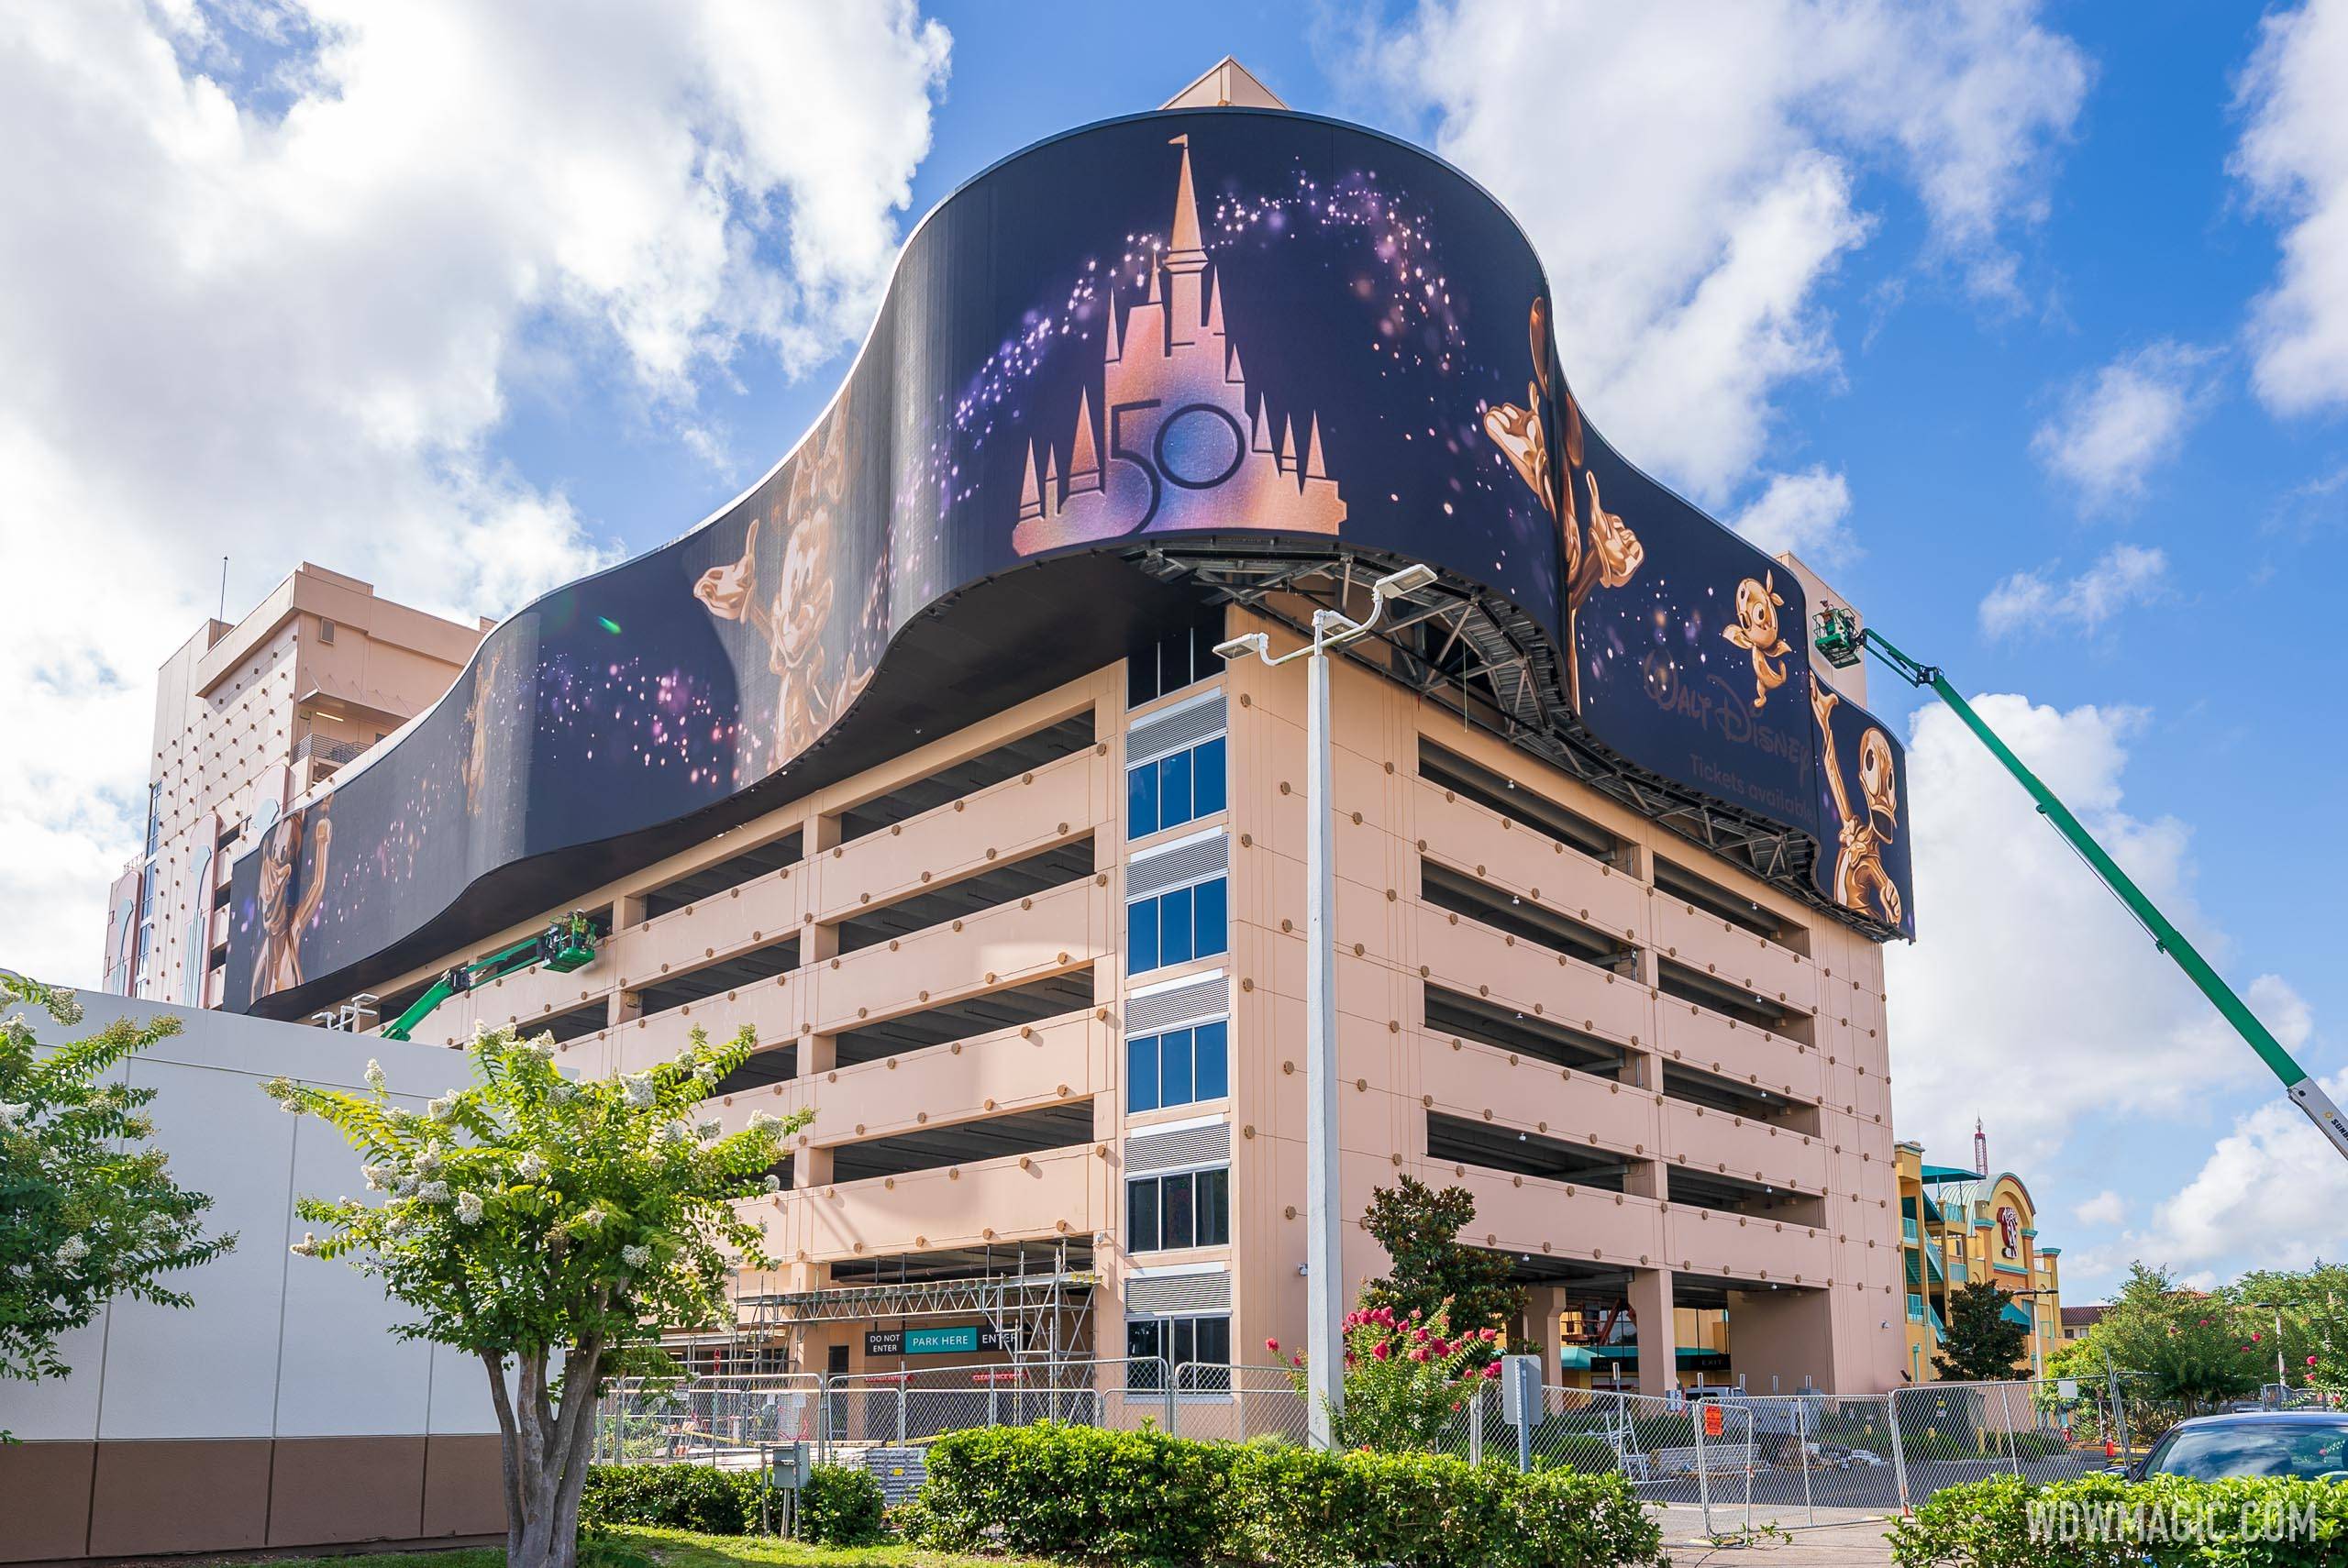 First look at the new Walt Disney World International Drive dynamic digital art display